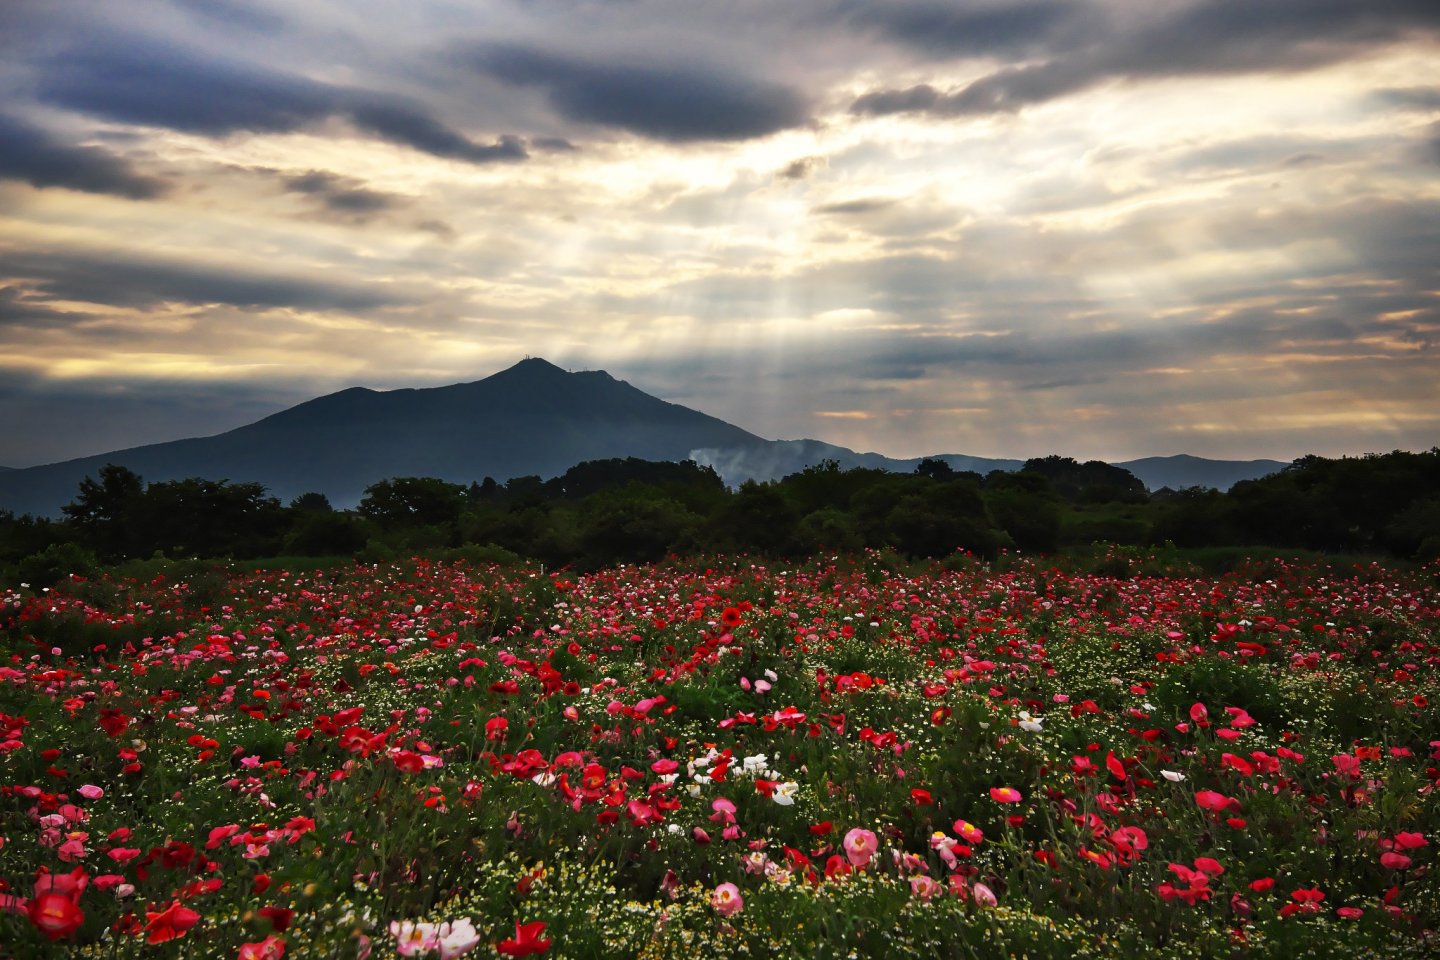 Poppies with a backdrop of Mount Tsukuba